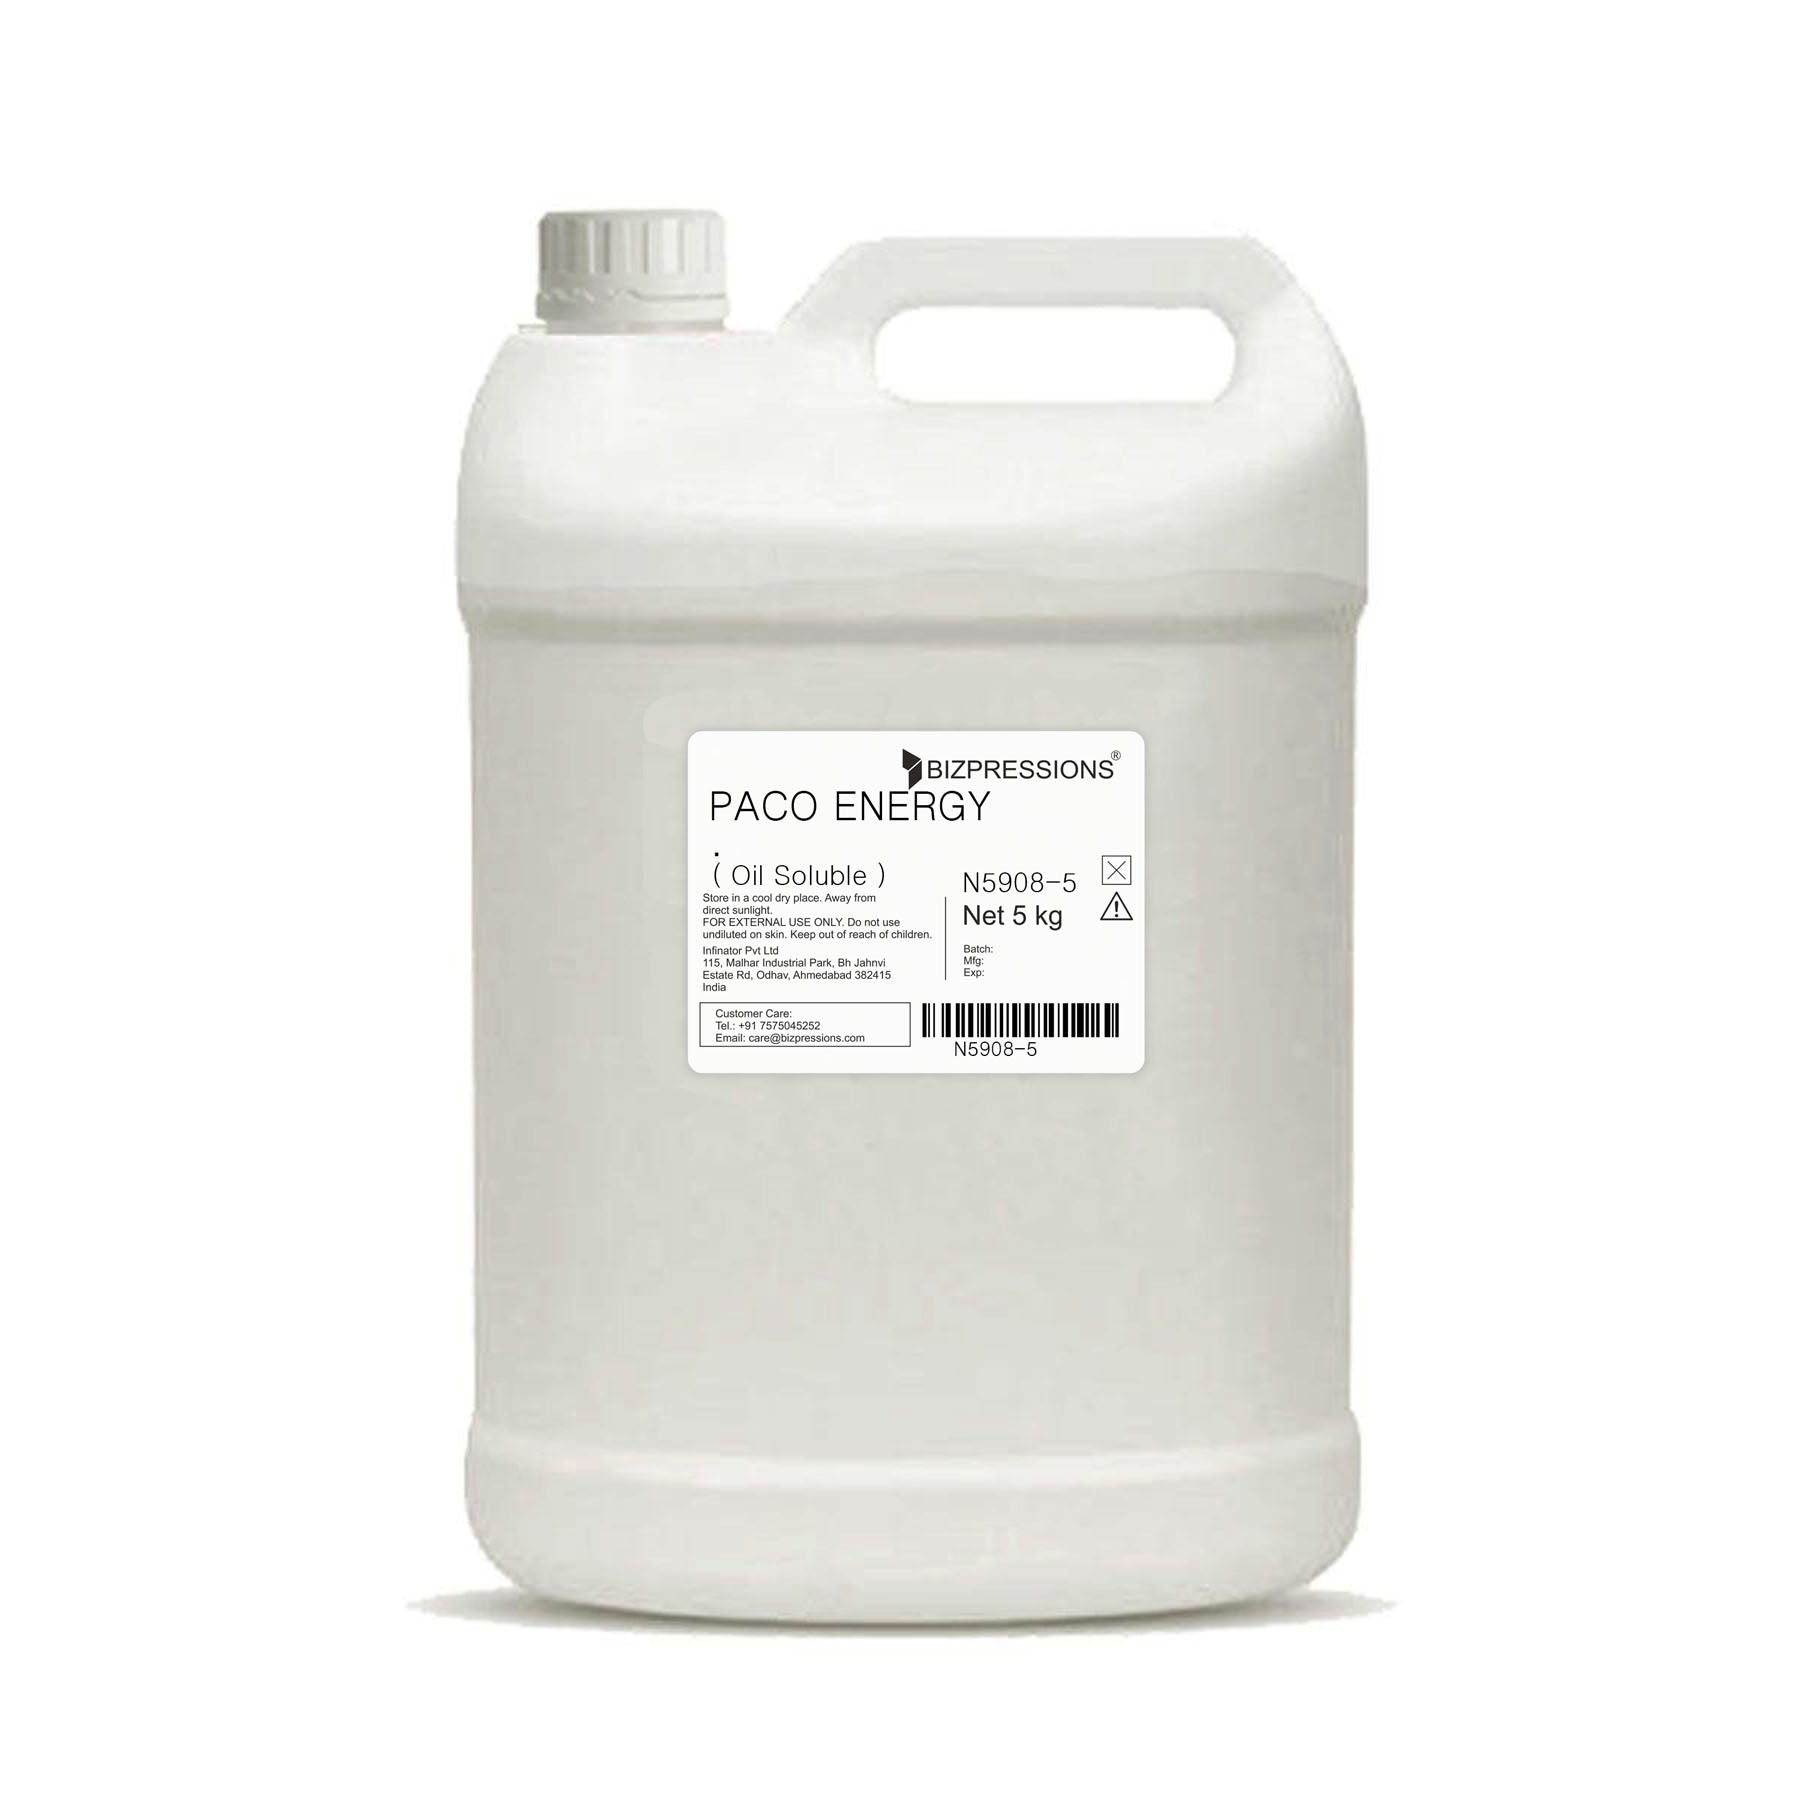 PACO ENERGY - Fragrance ( Oil Soluble ) - 5 kg